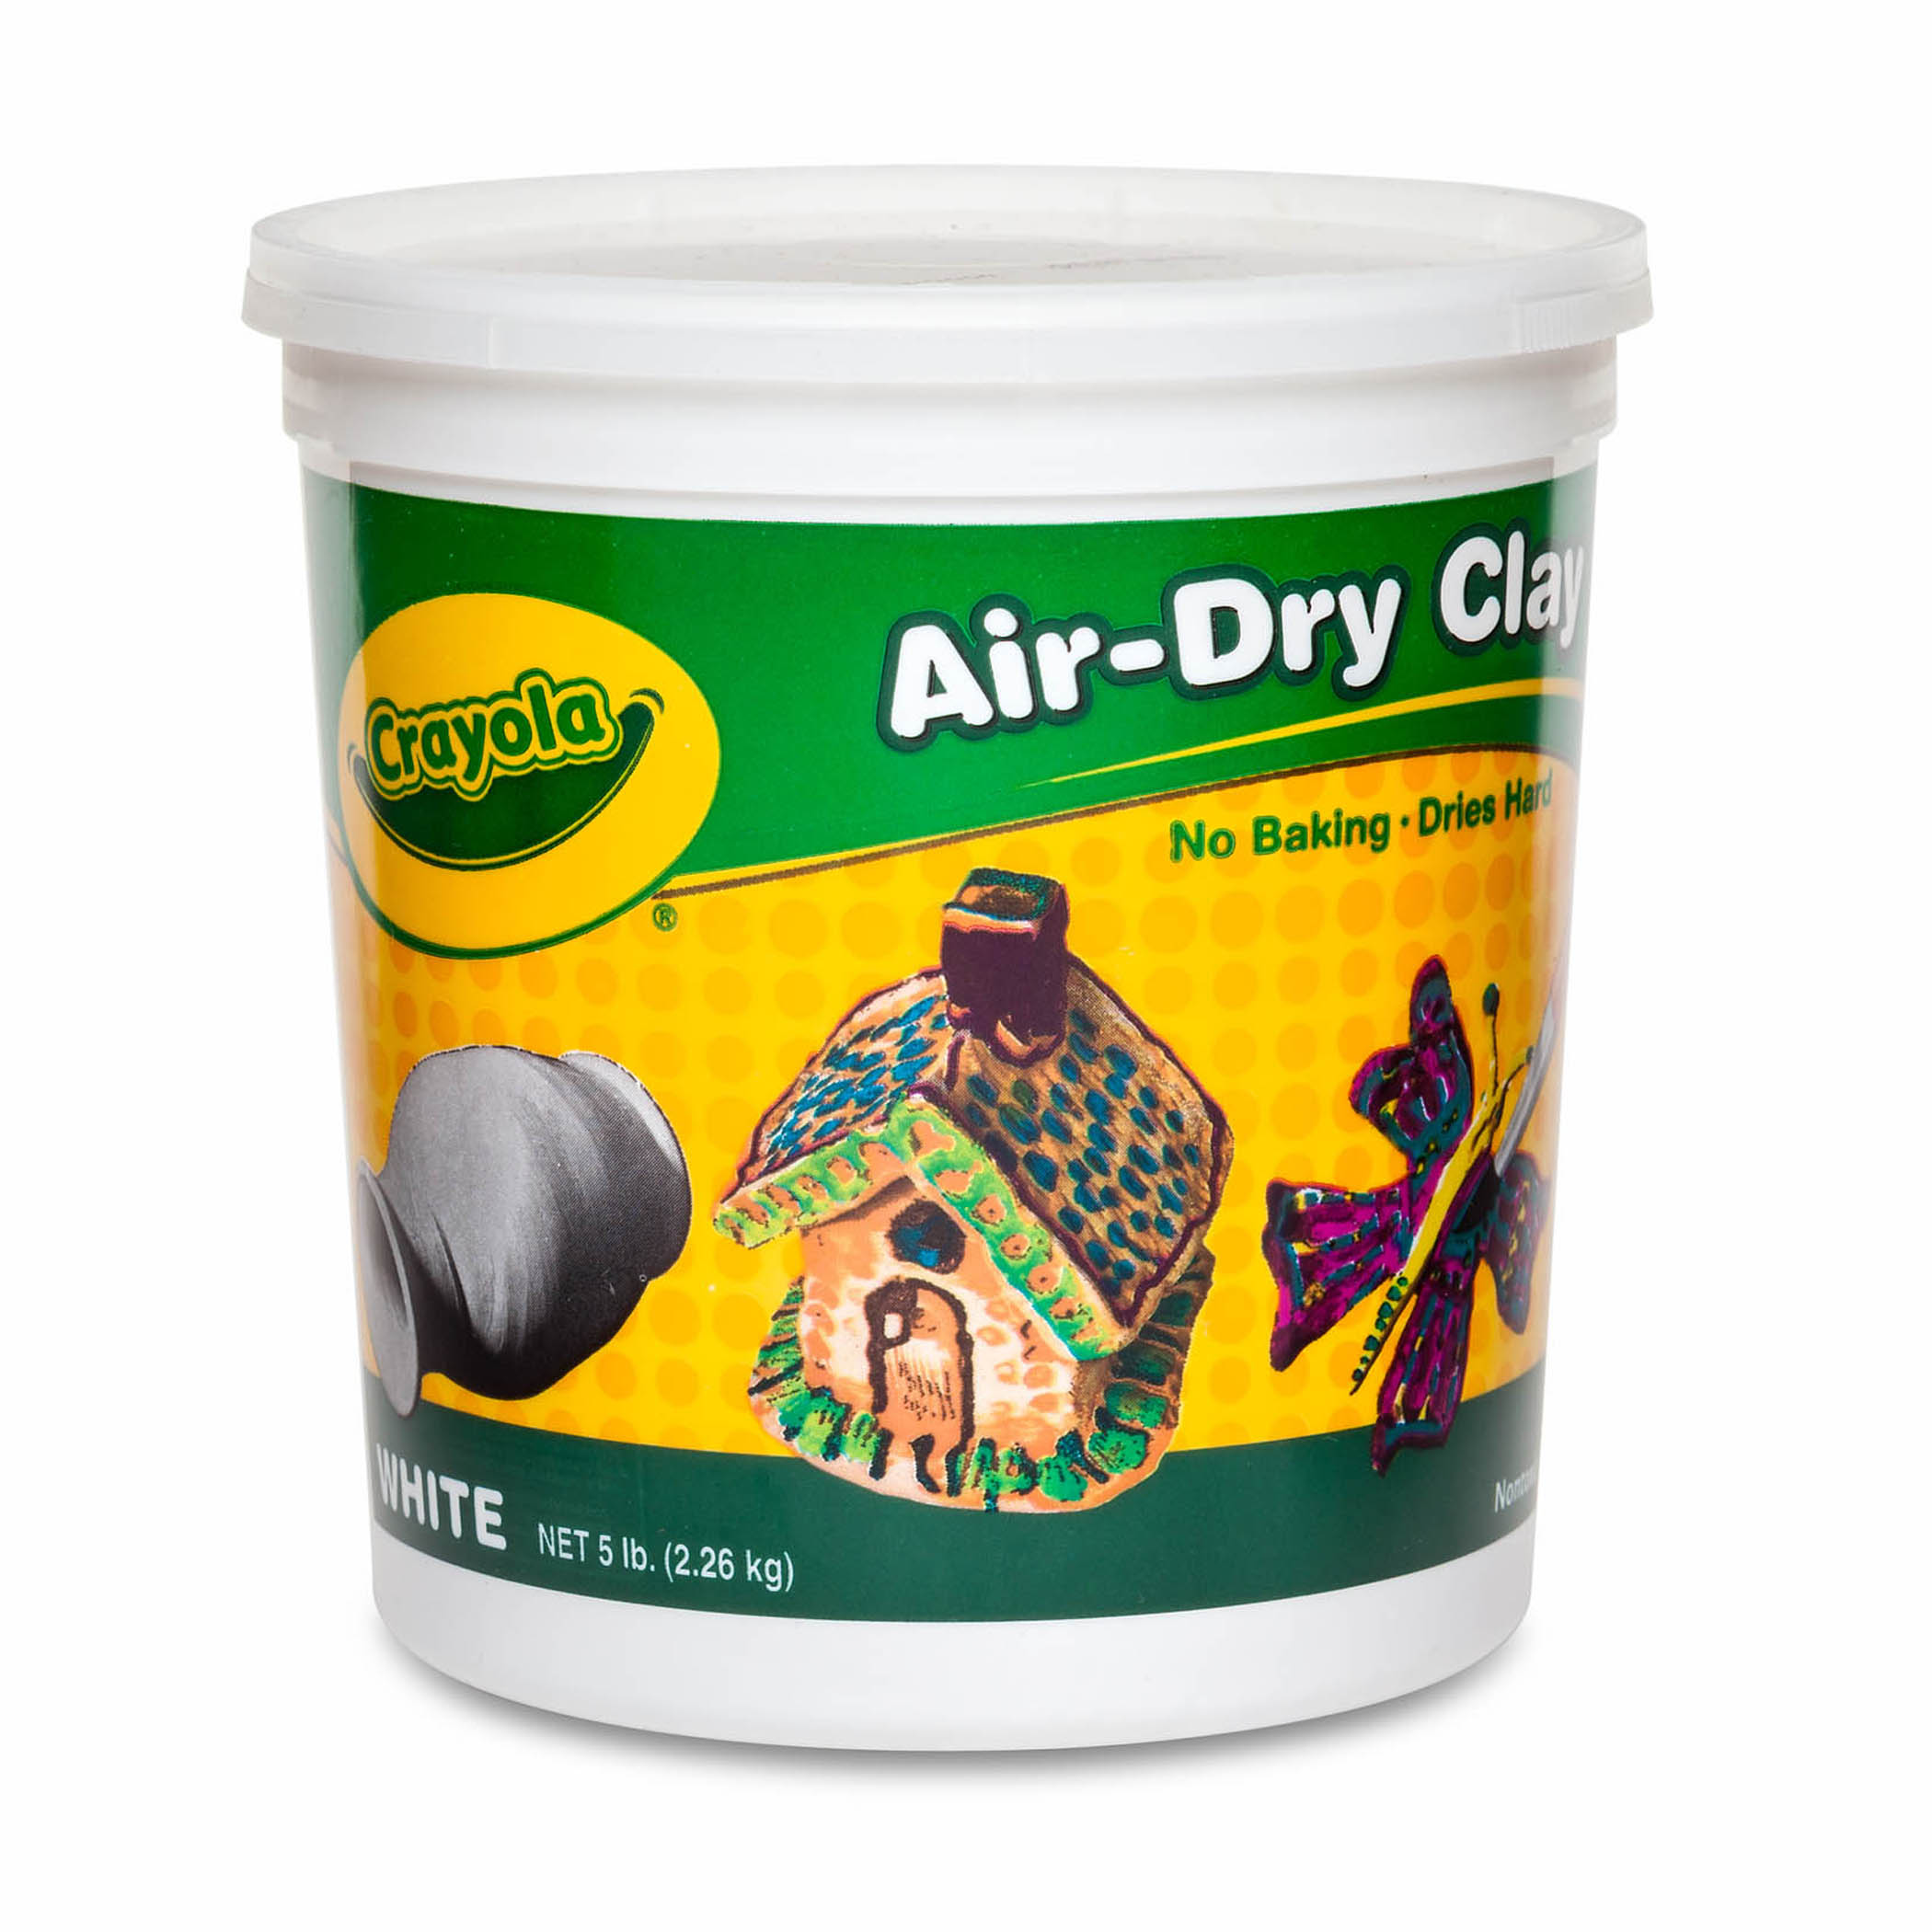 Crayola Air-Dry Clay, White, 5 Lb Per Pack, 2 Packs